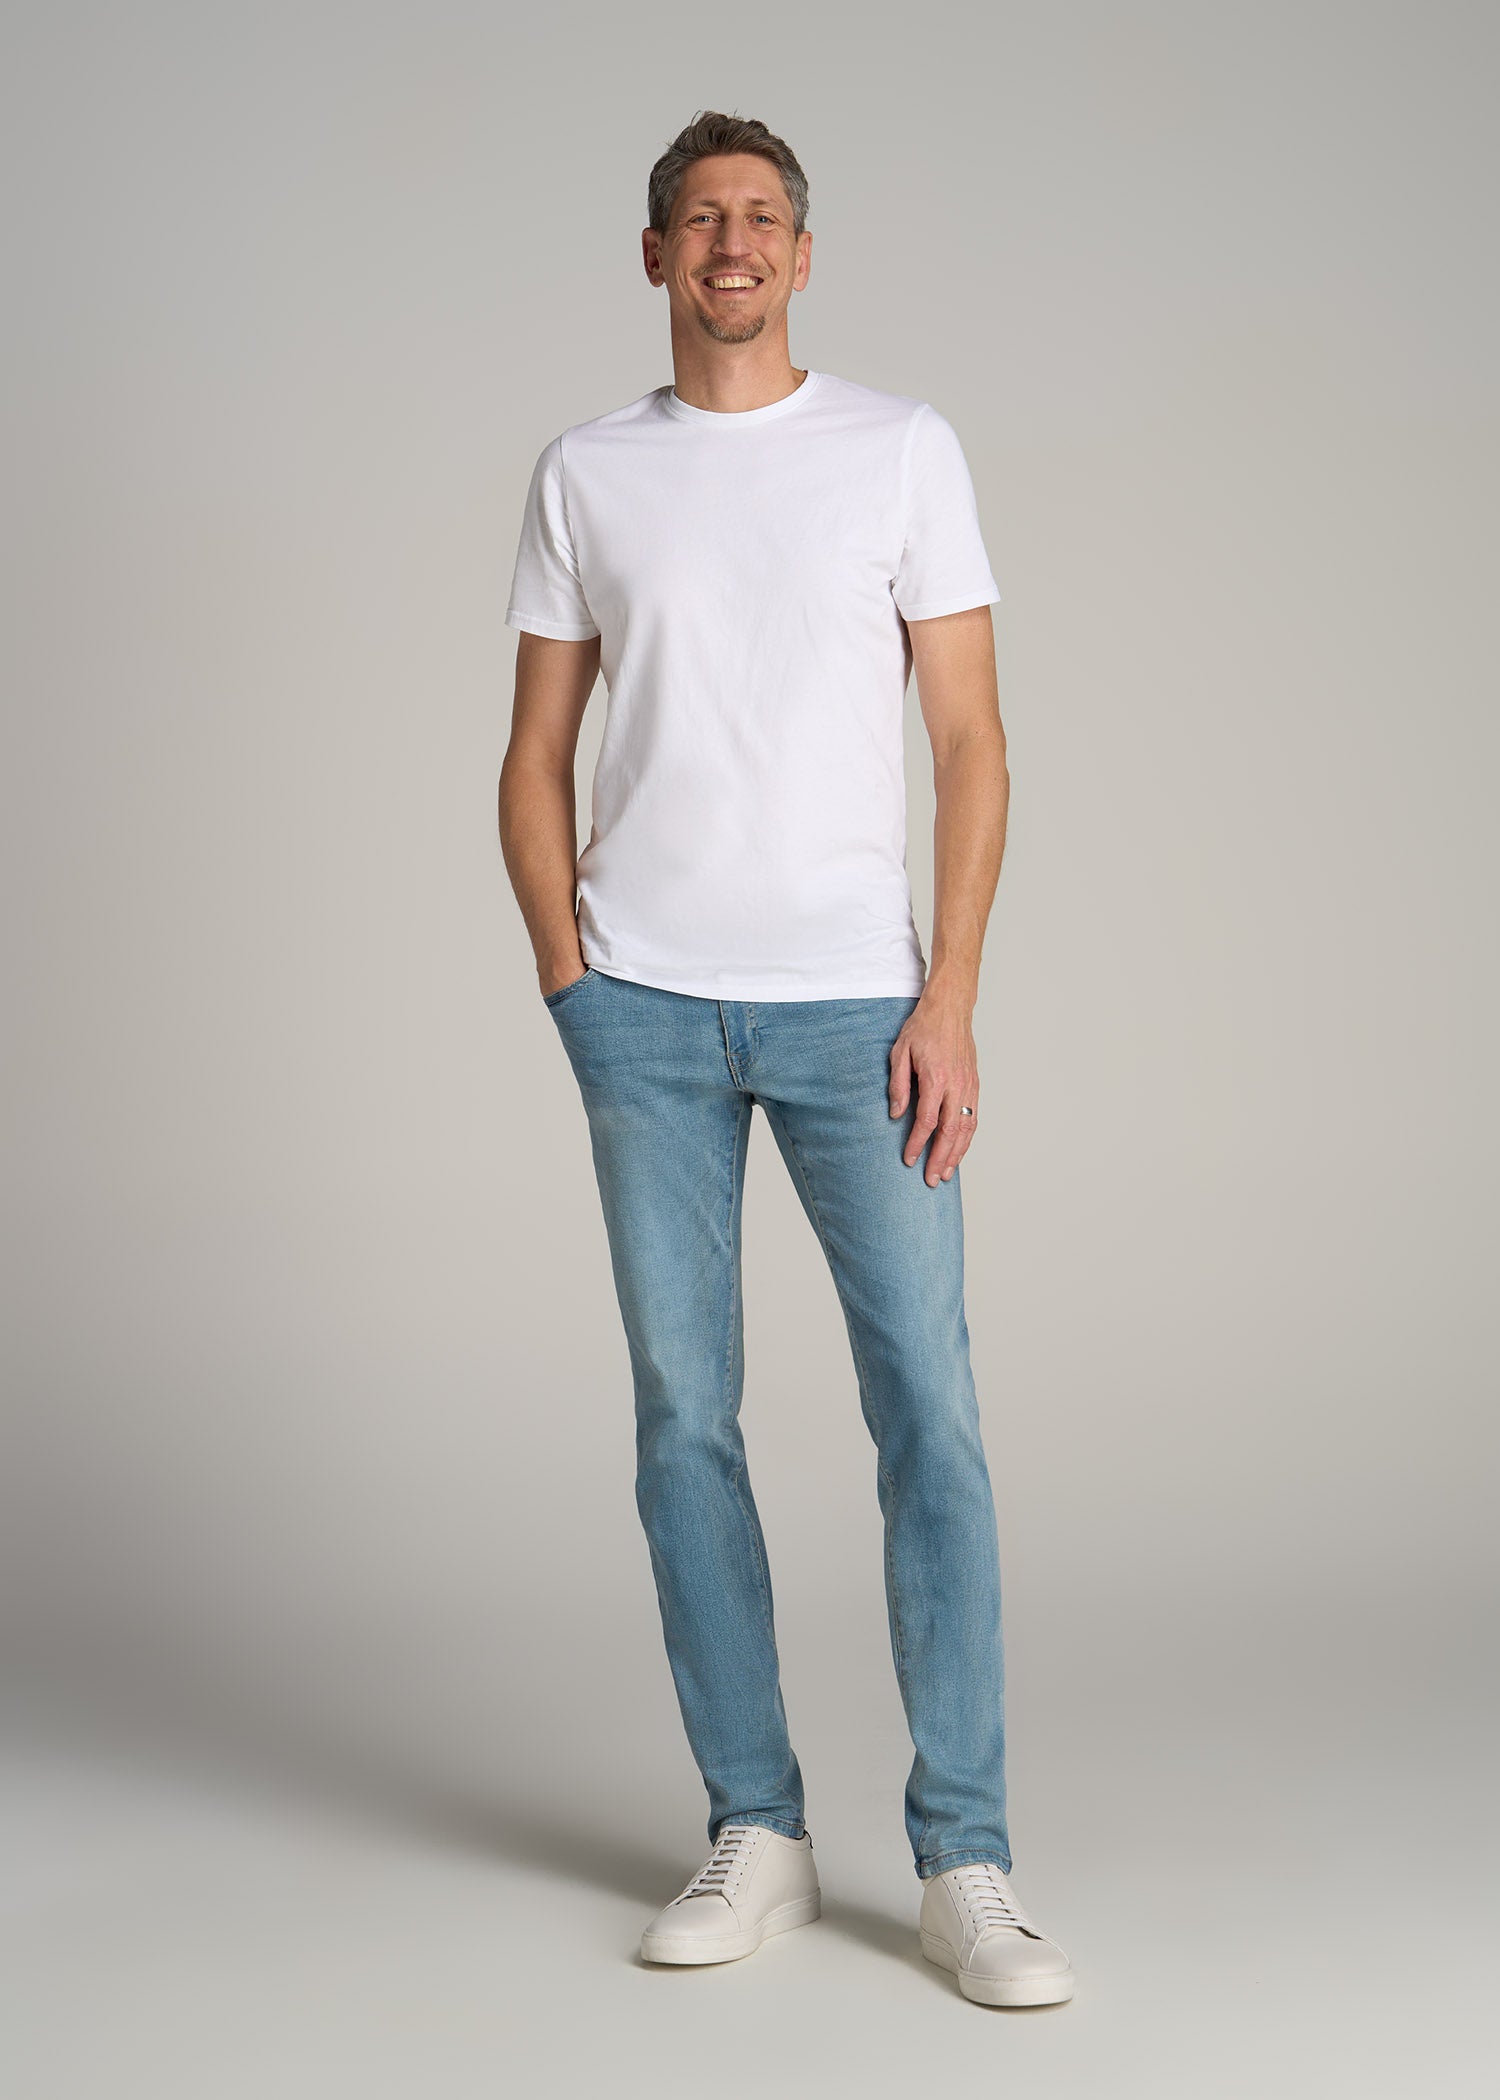 Superfit Denim Slim Men Dark Blue Jeans - Buy Superfit Denim Slim Men Dark Blue  Jeans Online at Best Prices in India | Flipkart.com